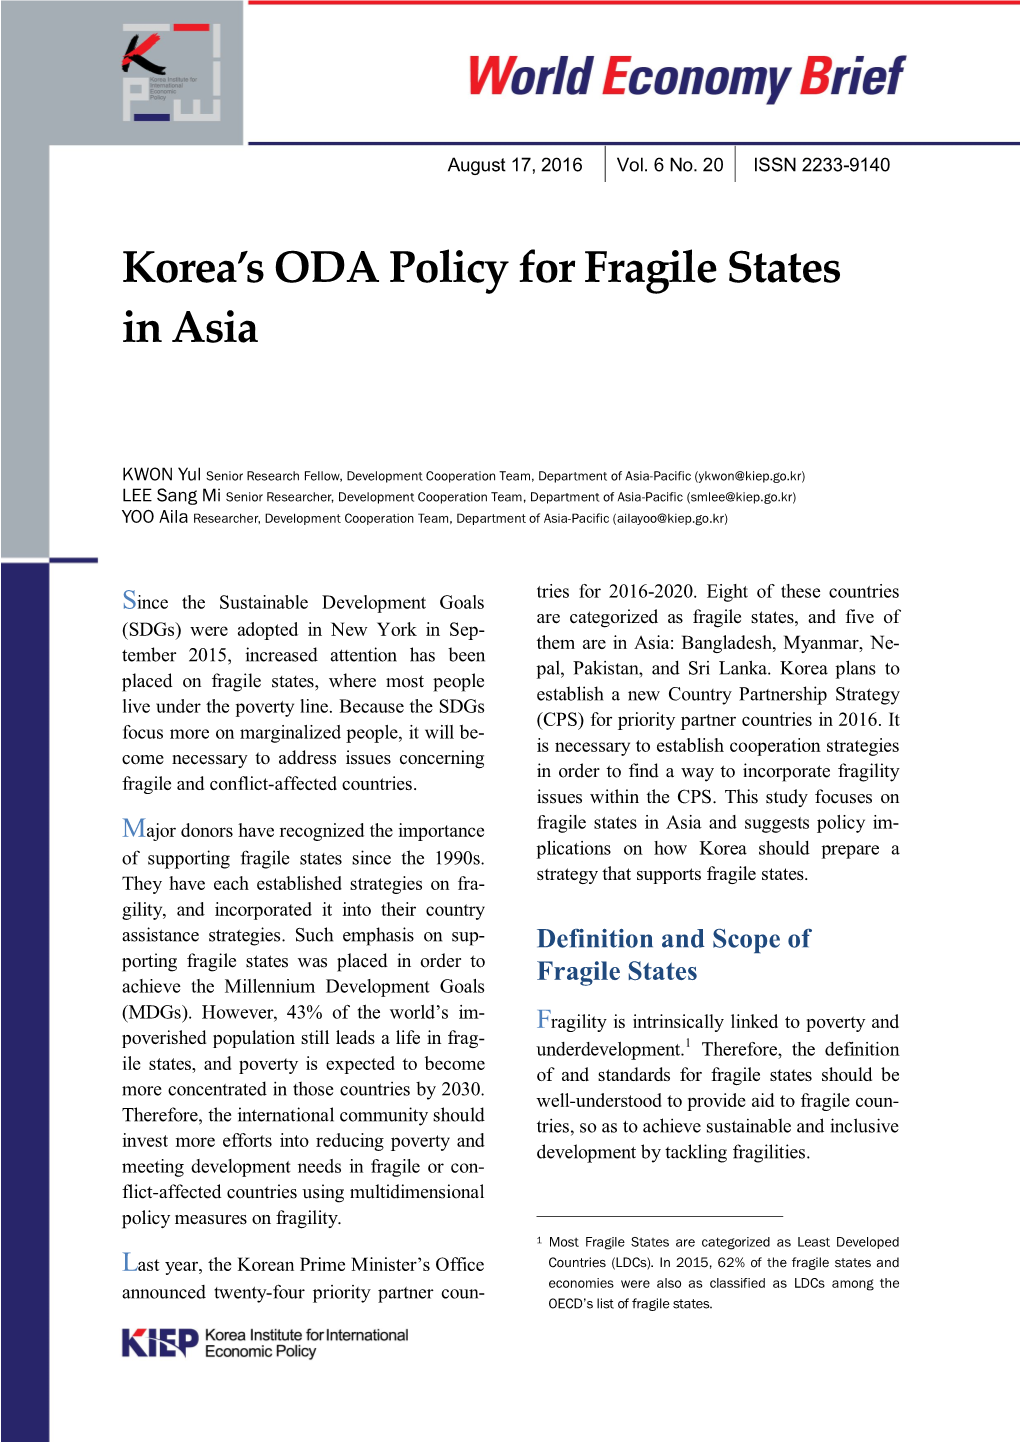 Korea's ODA Policy for Fragile States in Asia